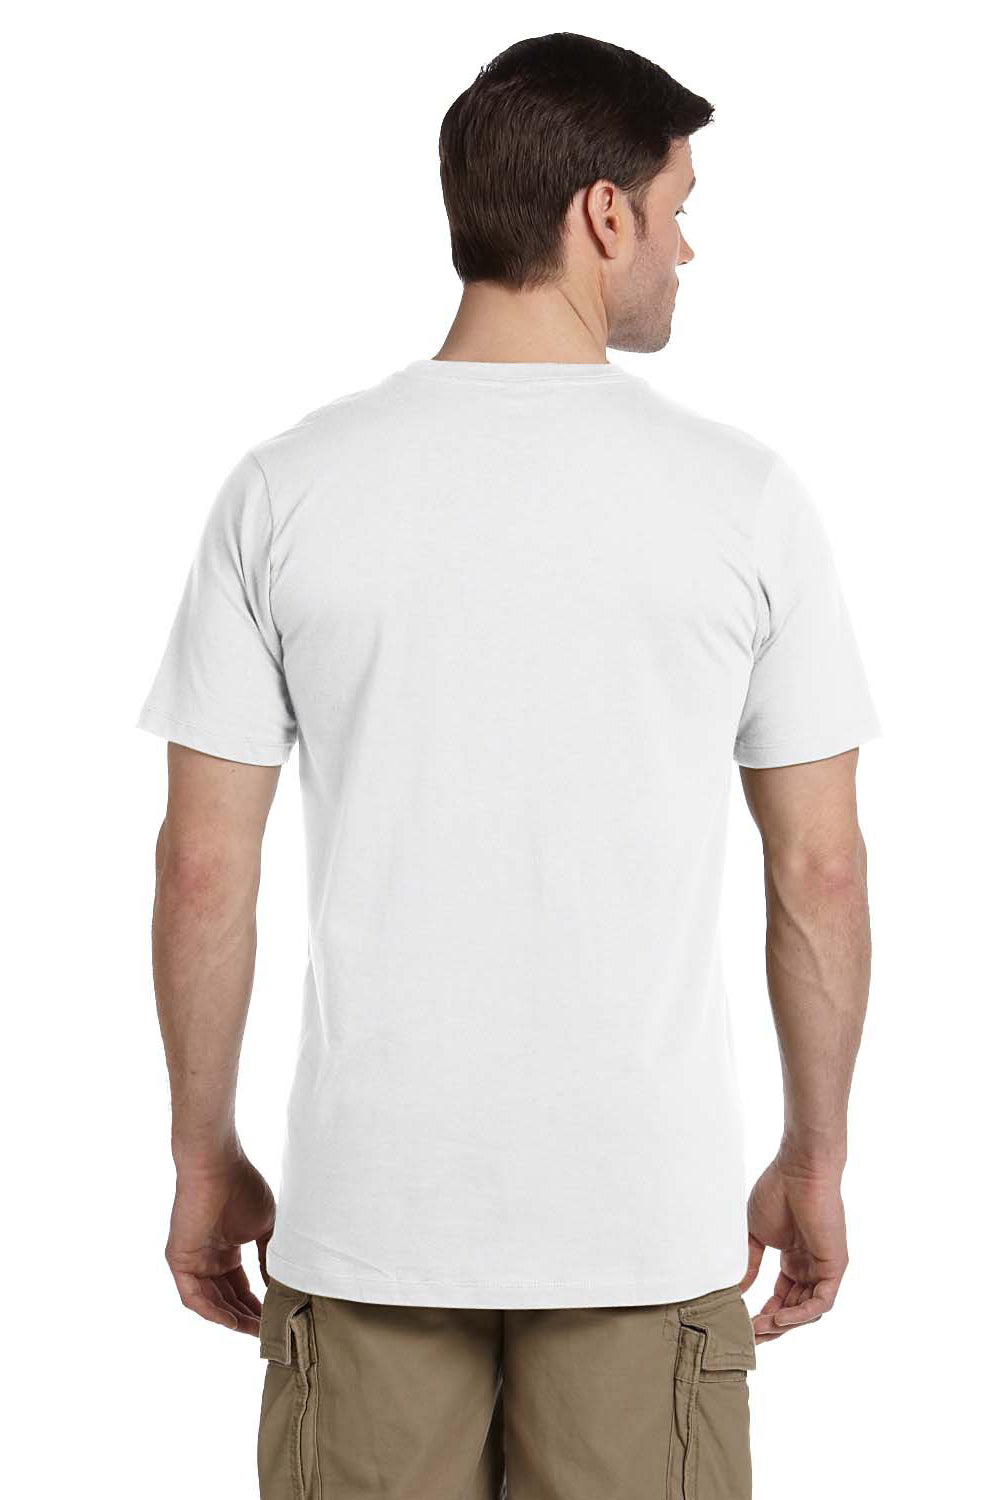 Econscious EC1075 Mens Short Sleeve Crewneck T-Shirt White Back